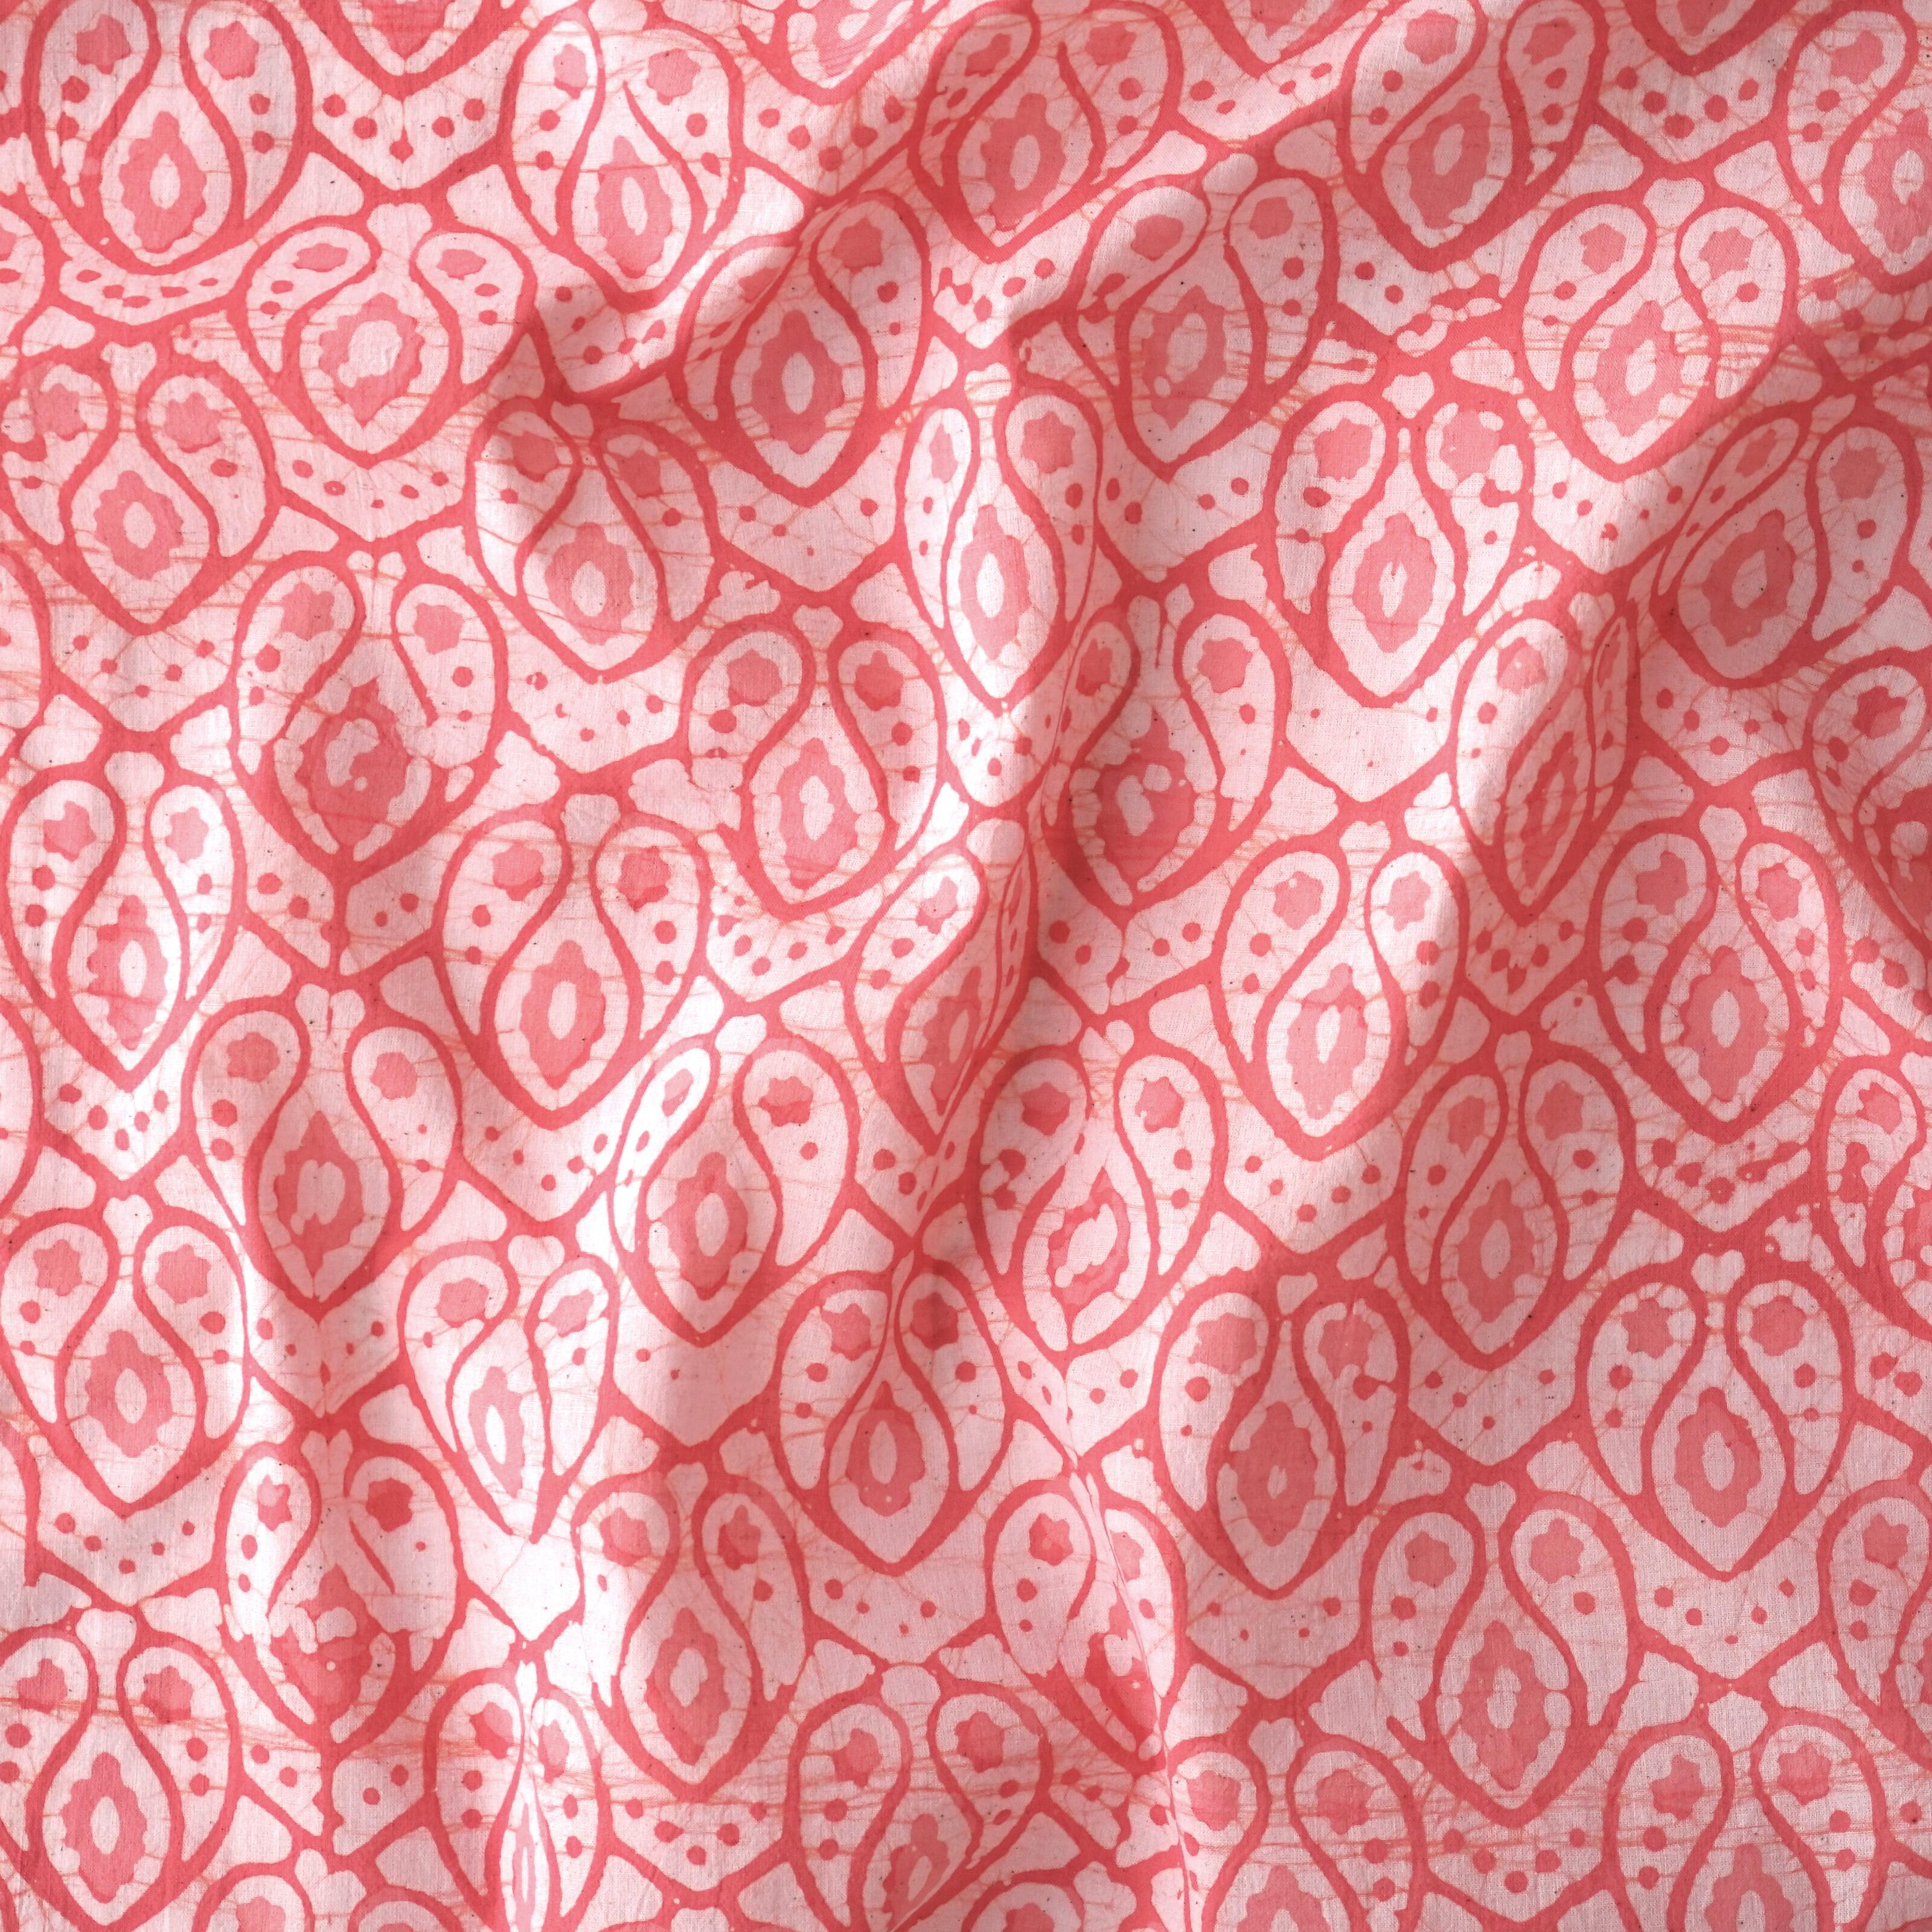 100% Block-Printed Batik Cotton Fabric From India - Tulip Mania Motif - Salmon Dye - Contrast